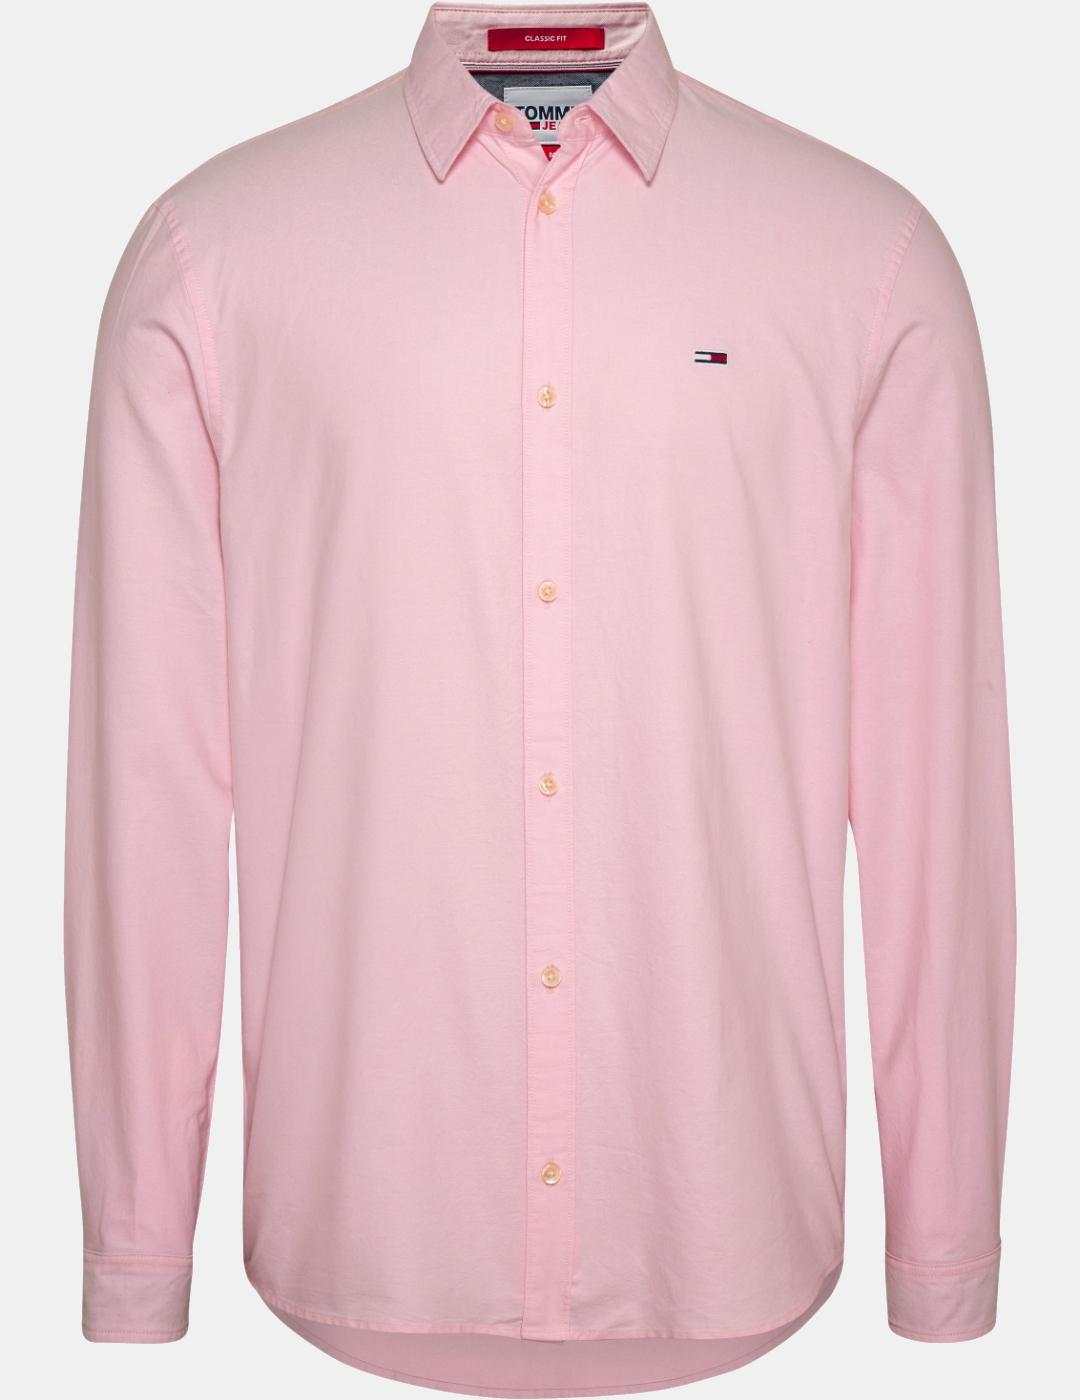 Camisa Tommy Jean rosa para hombre